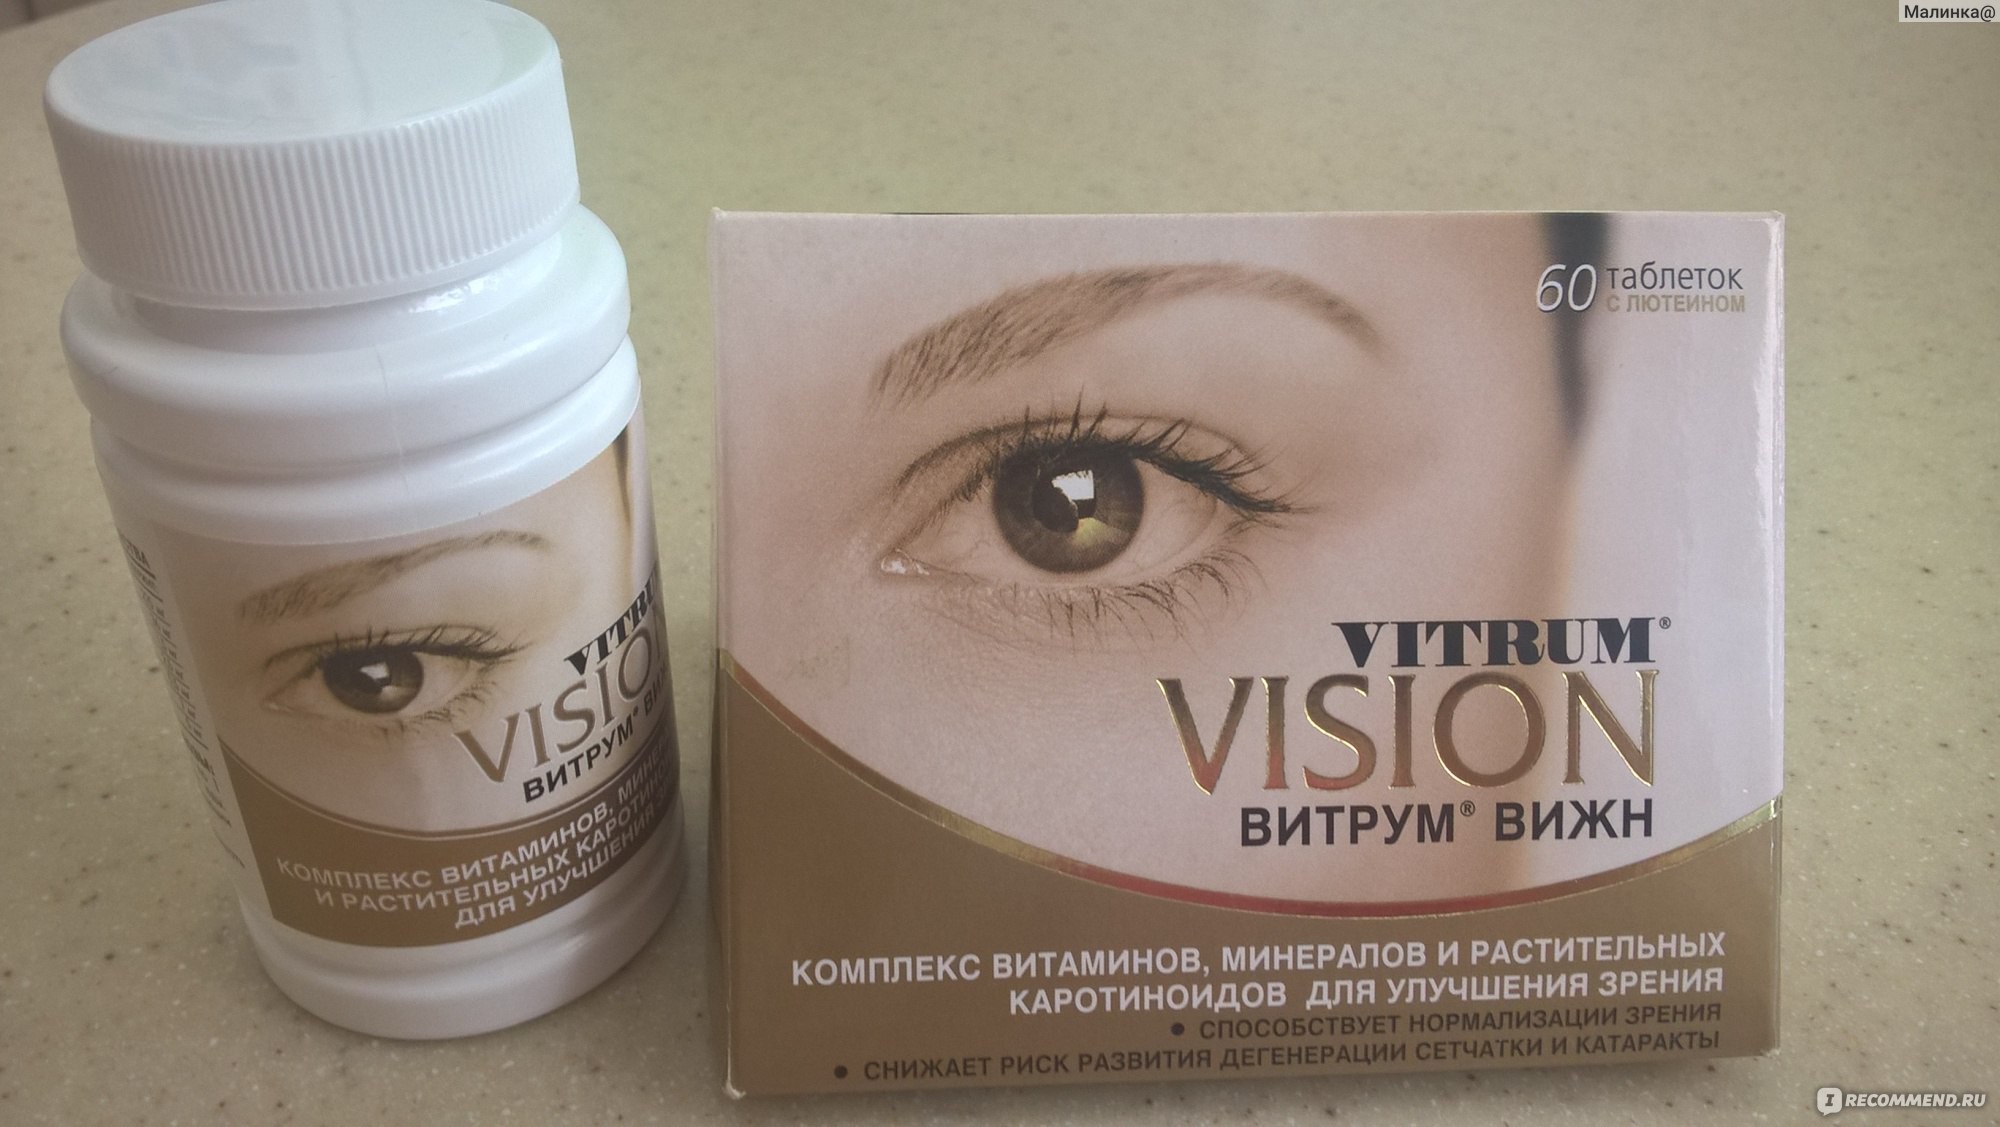 Vitrum vision. Витамины для глаз витрум Вижн. Витрум Вижн с лютеином. Витамины для глаз витрум Вижн форте. Витрум-Вижн 30 шт.